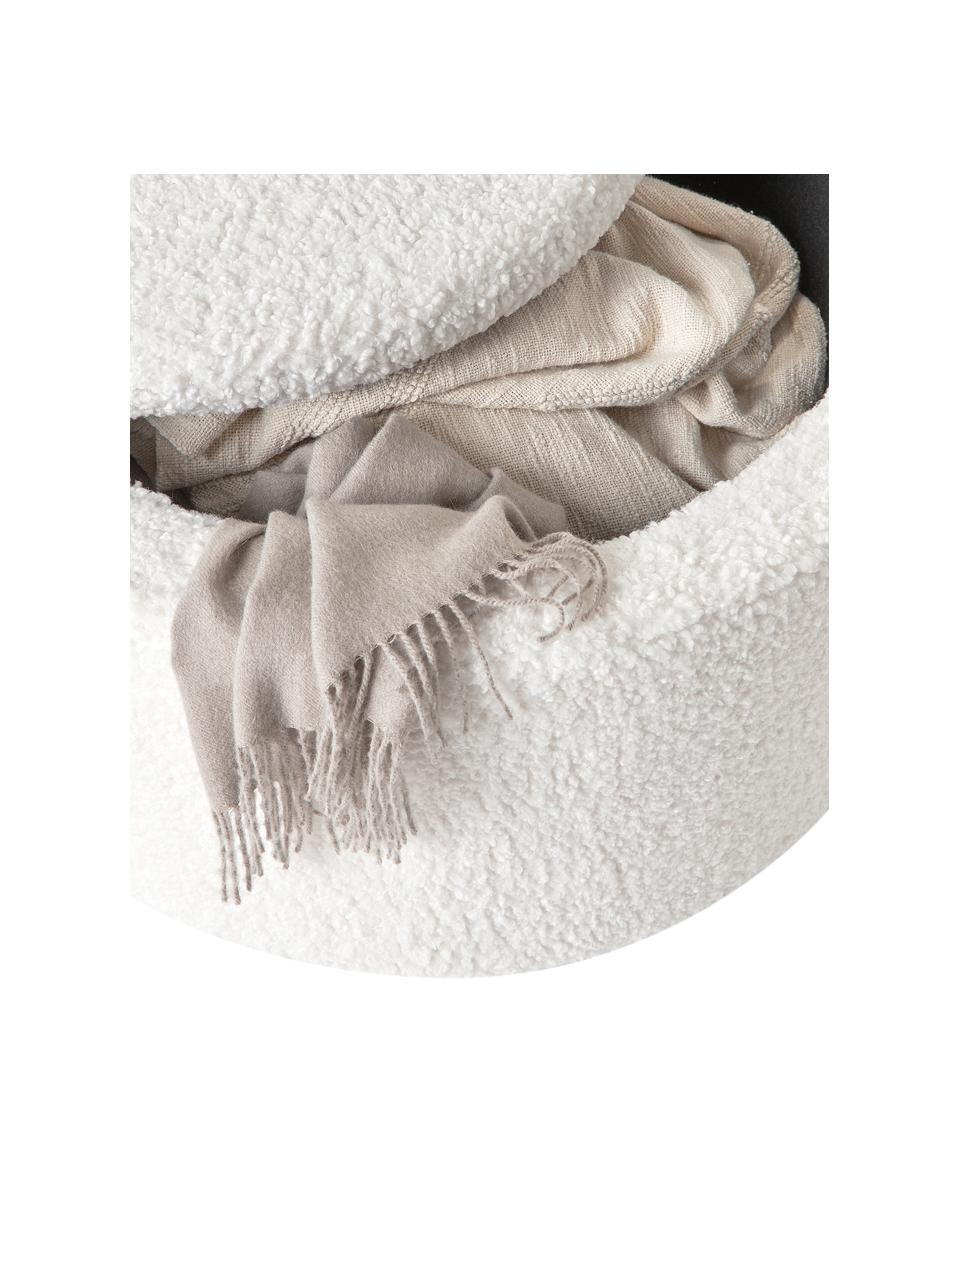 Grand tabouret avec coffre tissu bouclé blanc Chiara, Tissu peluche blanc, Ø 70 x haut. 42 cm